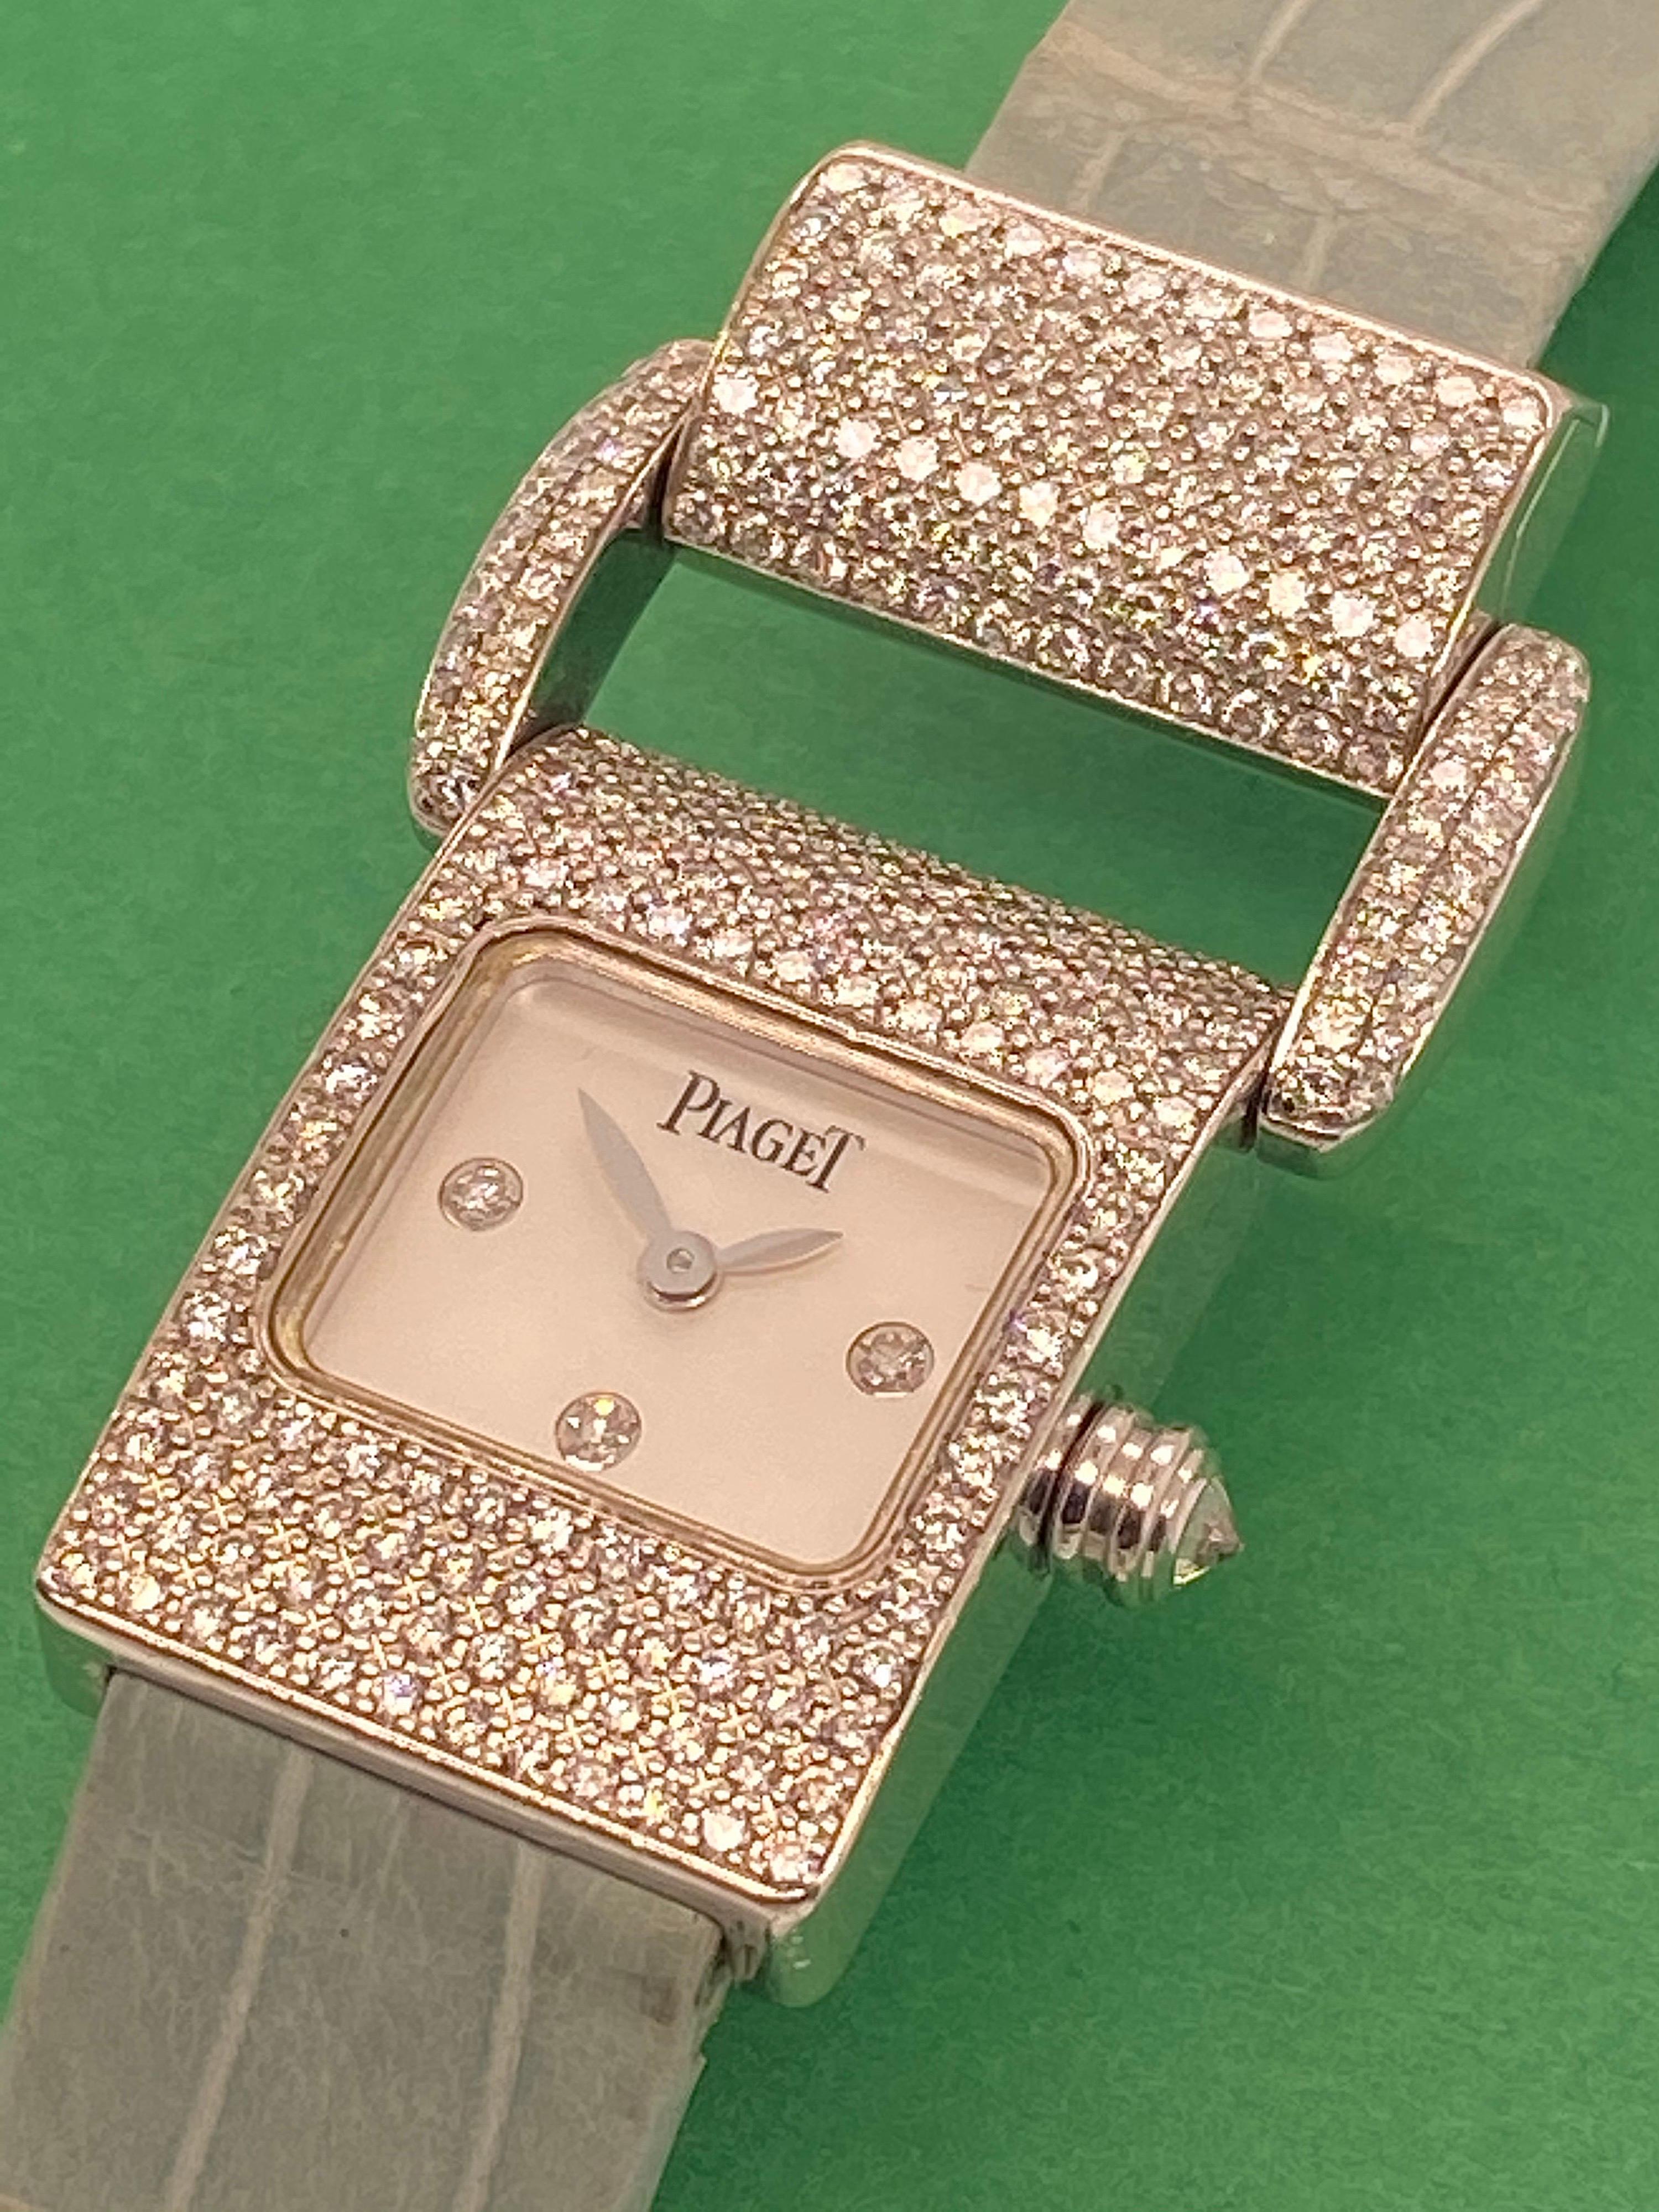 Round Cut Piaget Ladies White Gold and Diamond Miss Protocole Wristwatch circa 2000